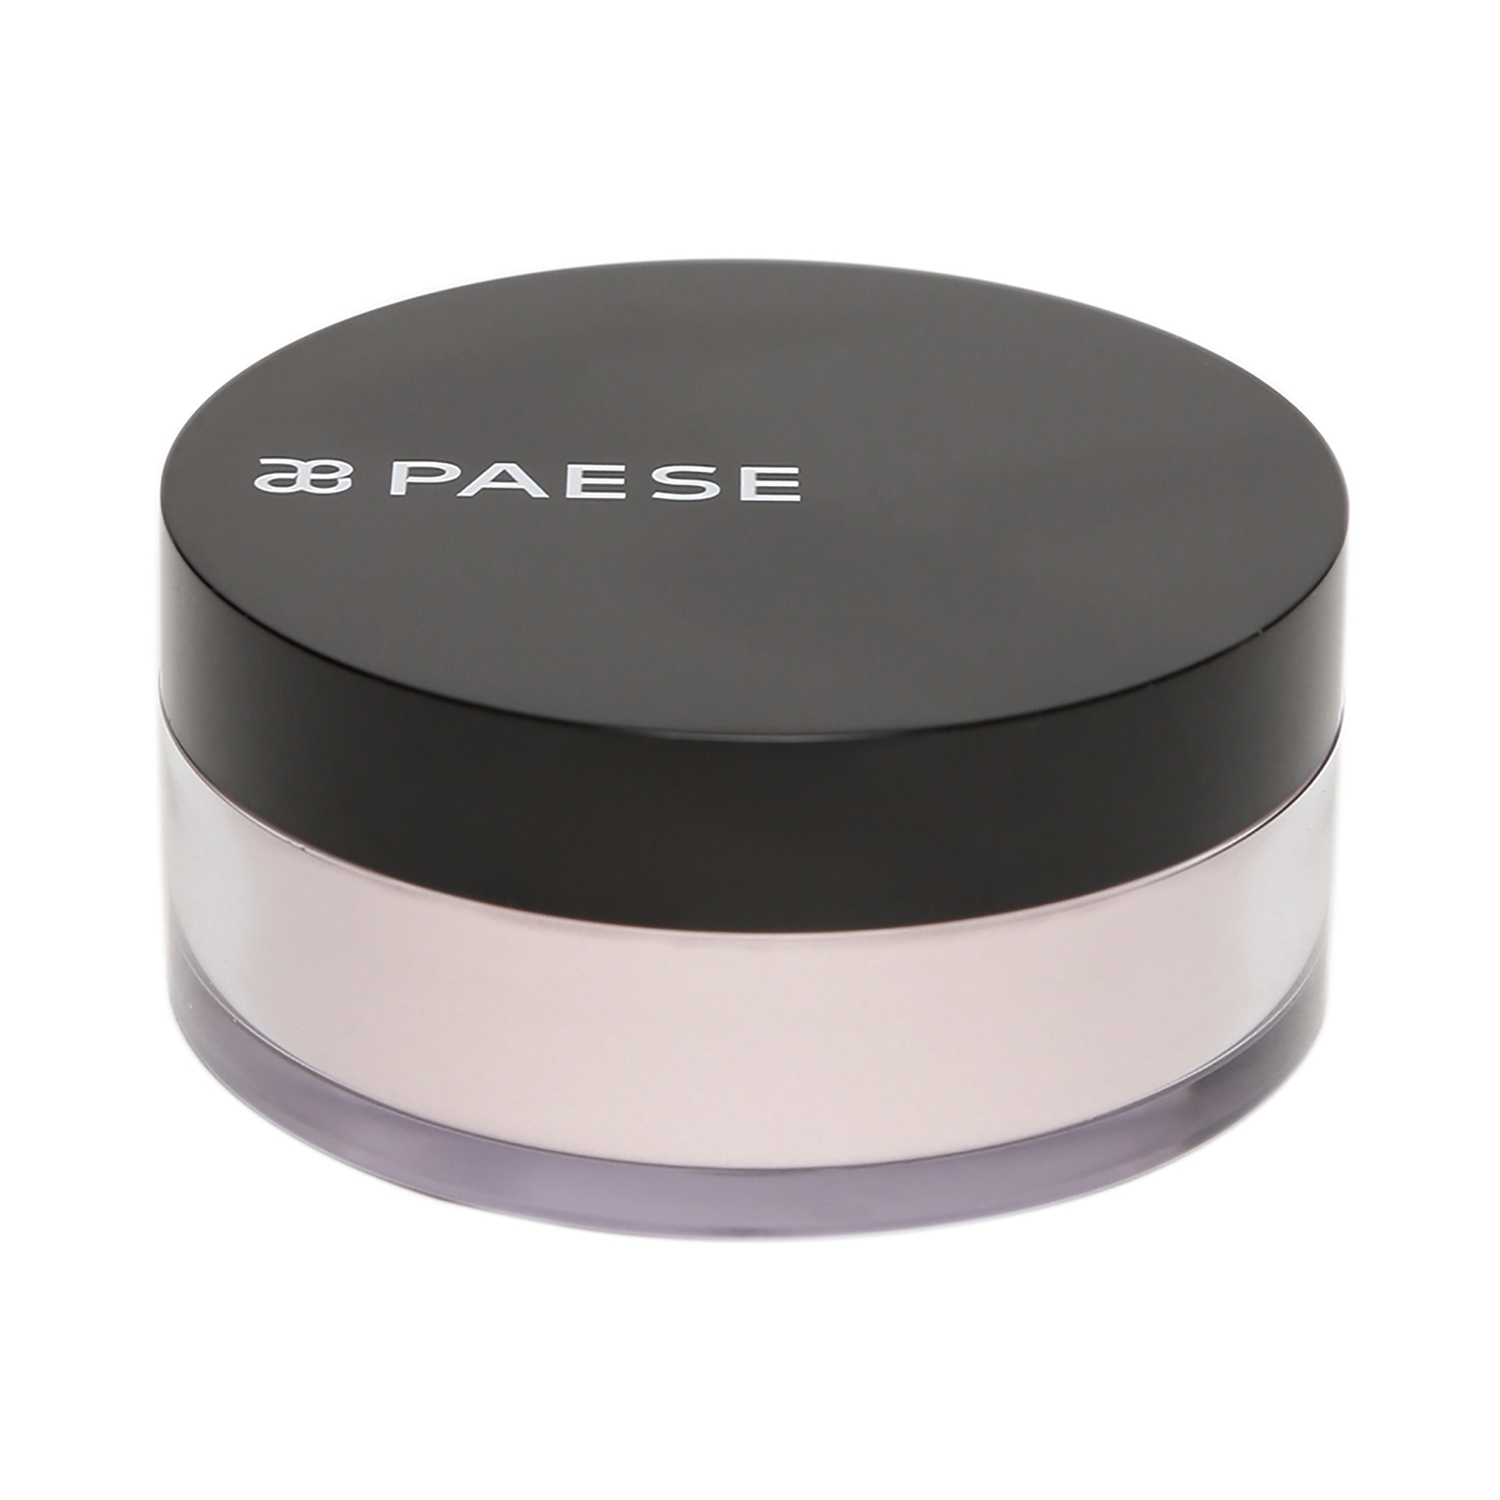 Paese Cosmetics | Paese Cosmetics Highlighter Illuminating Powder - 01 Shade (15g)